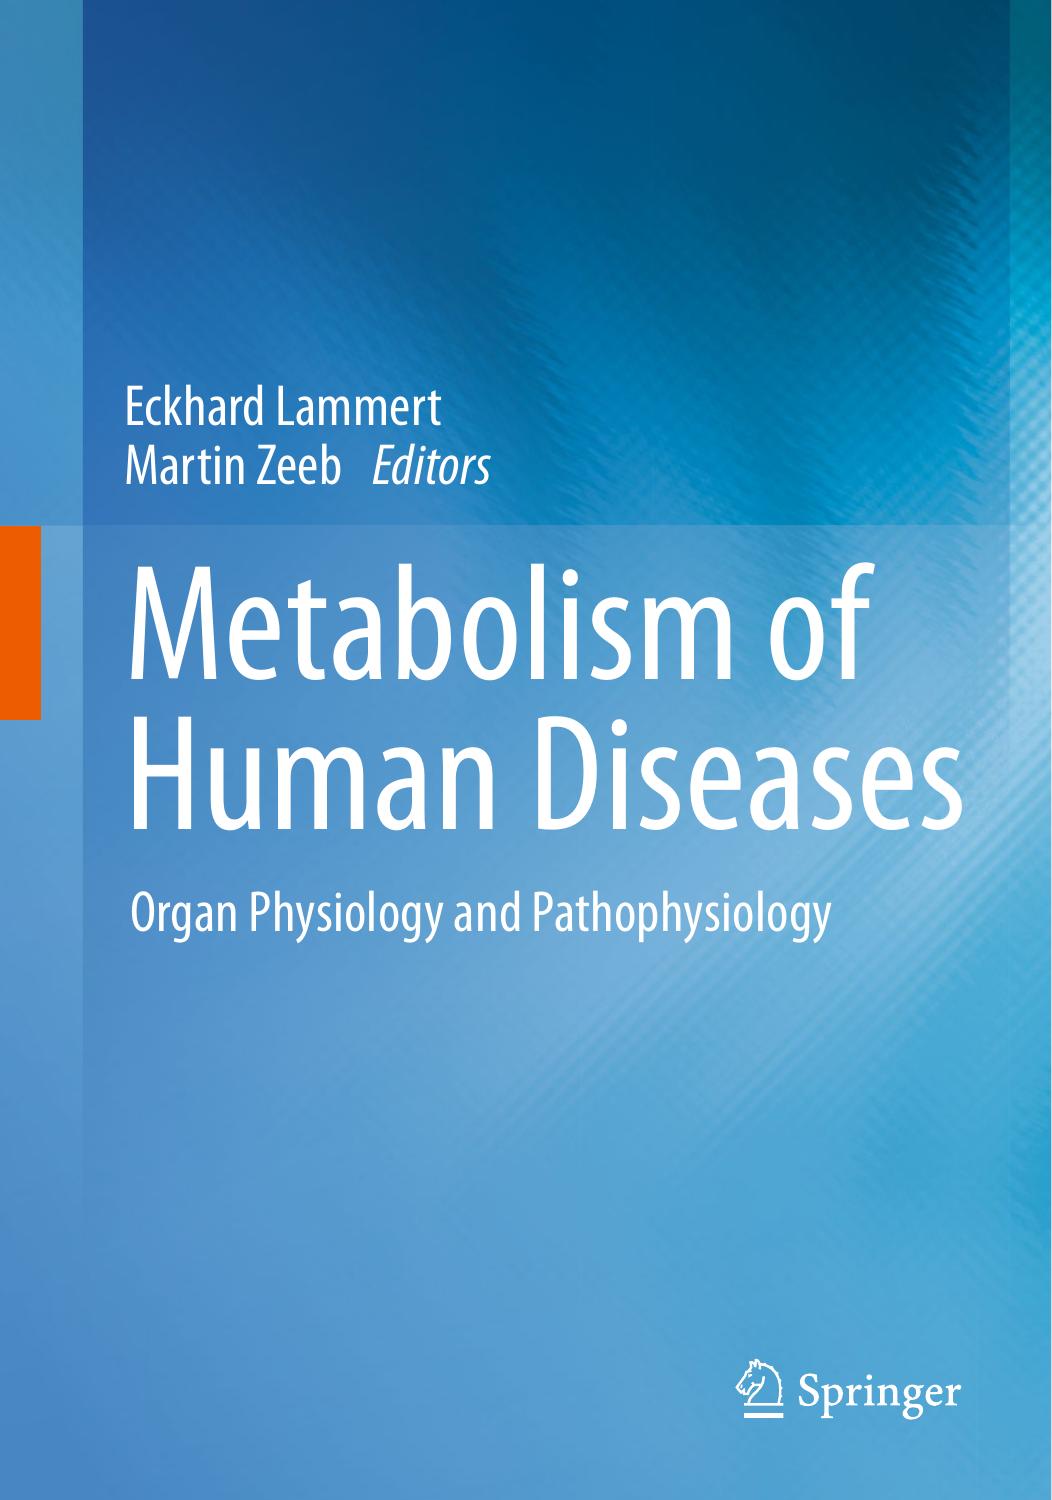 Metabolism of Human Diseases by Eckhard Lammert & Martin Zeeb